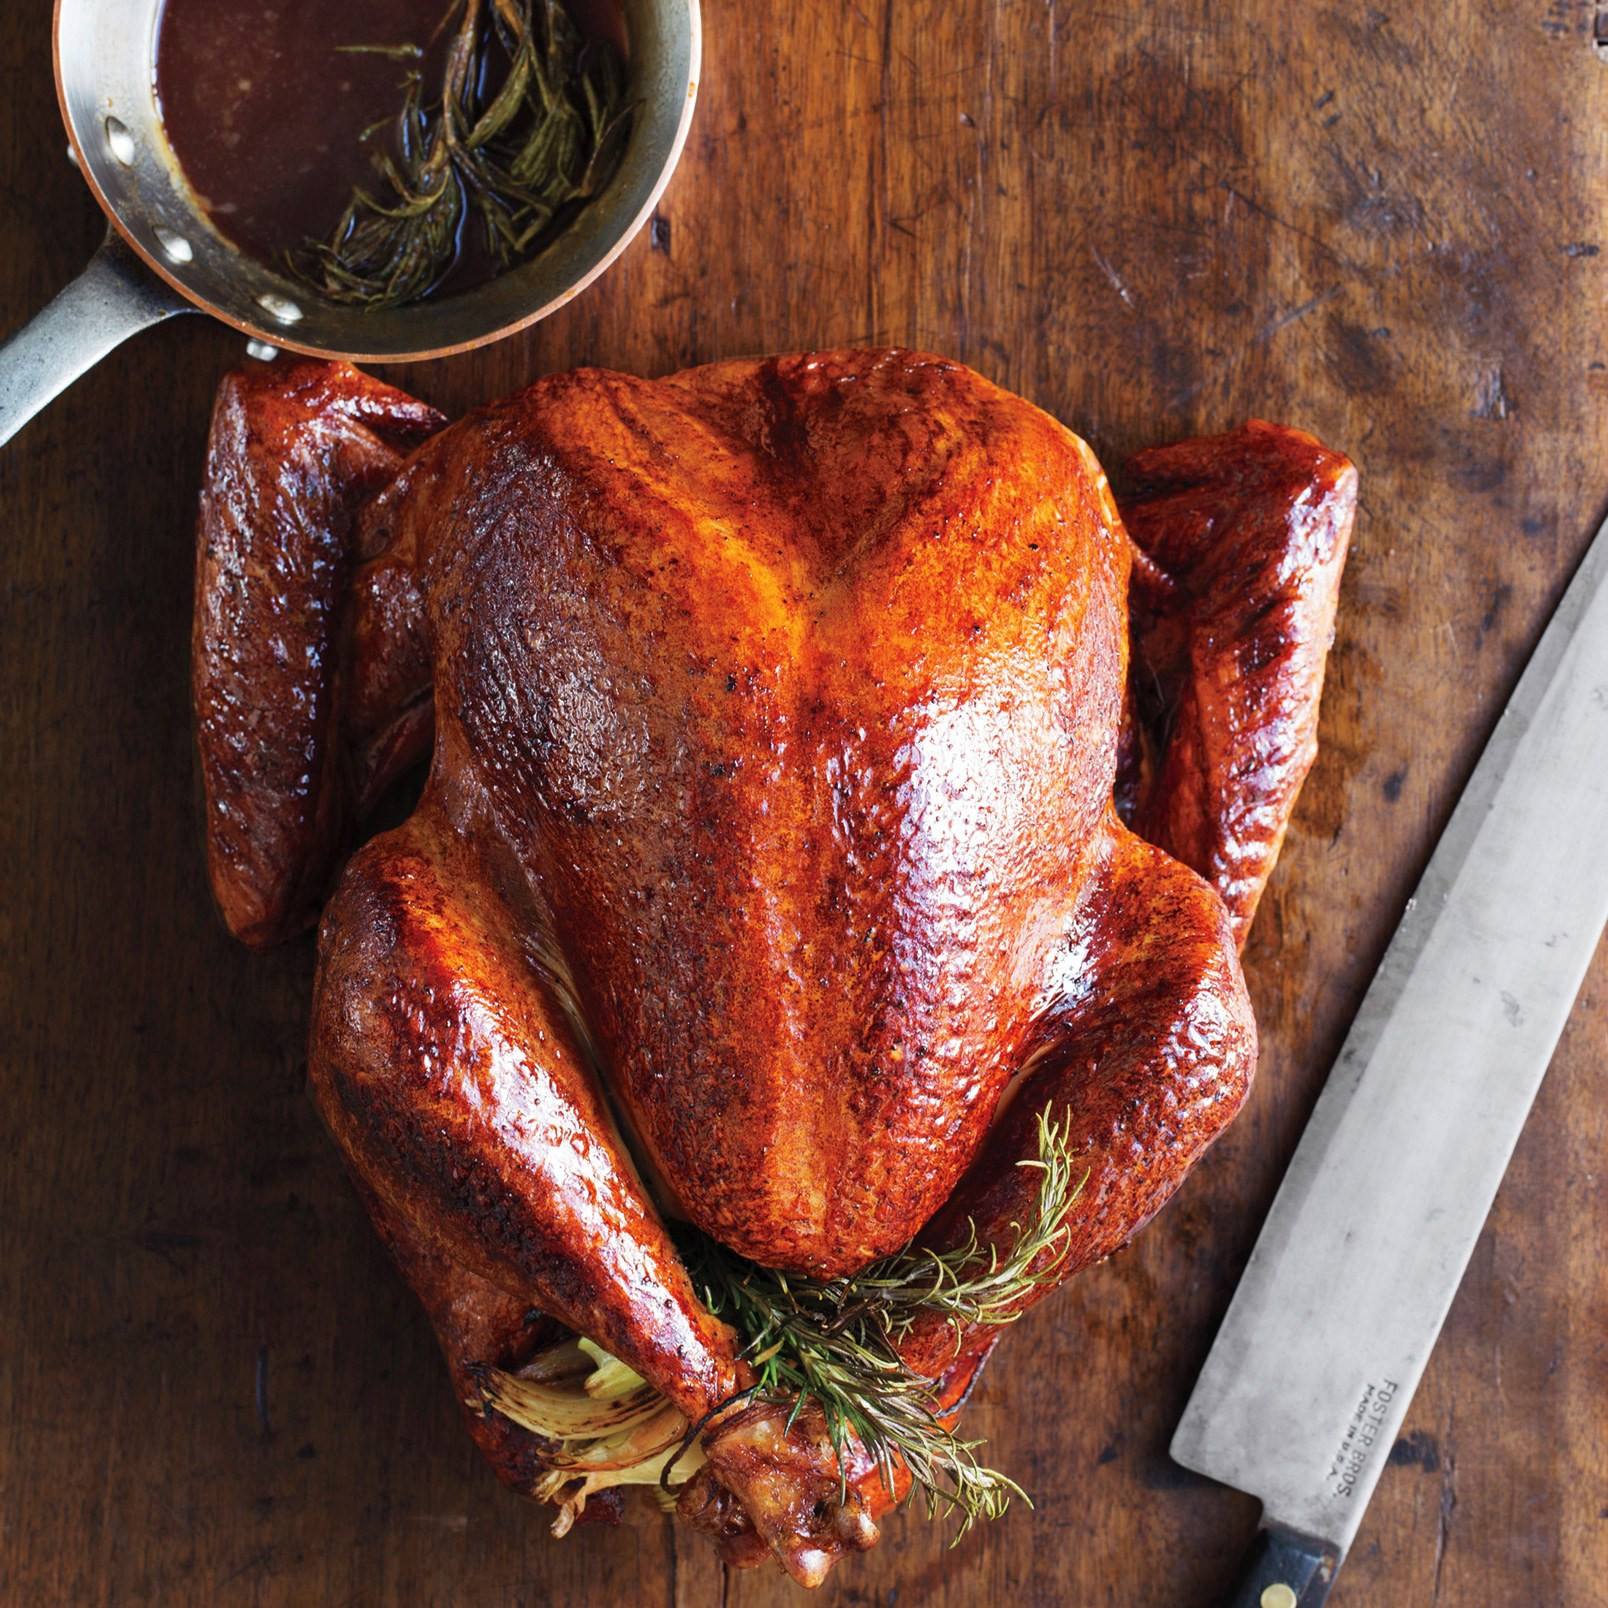 Roasted Turkey Recipes Thanksgiving
 A Simple Roast Turkey recipe